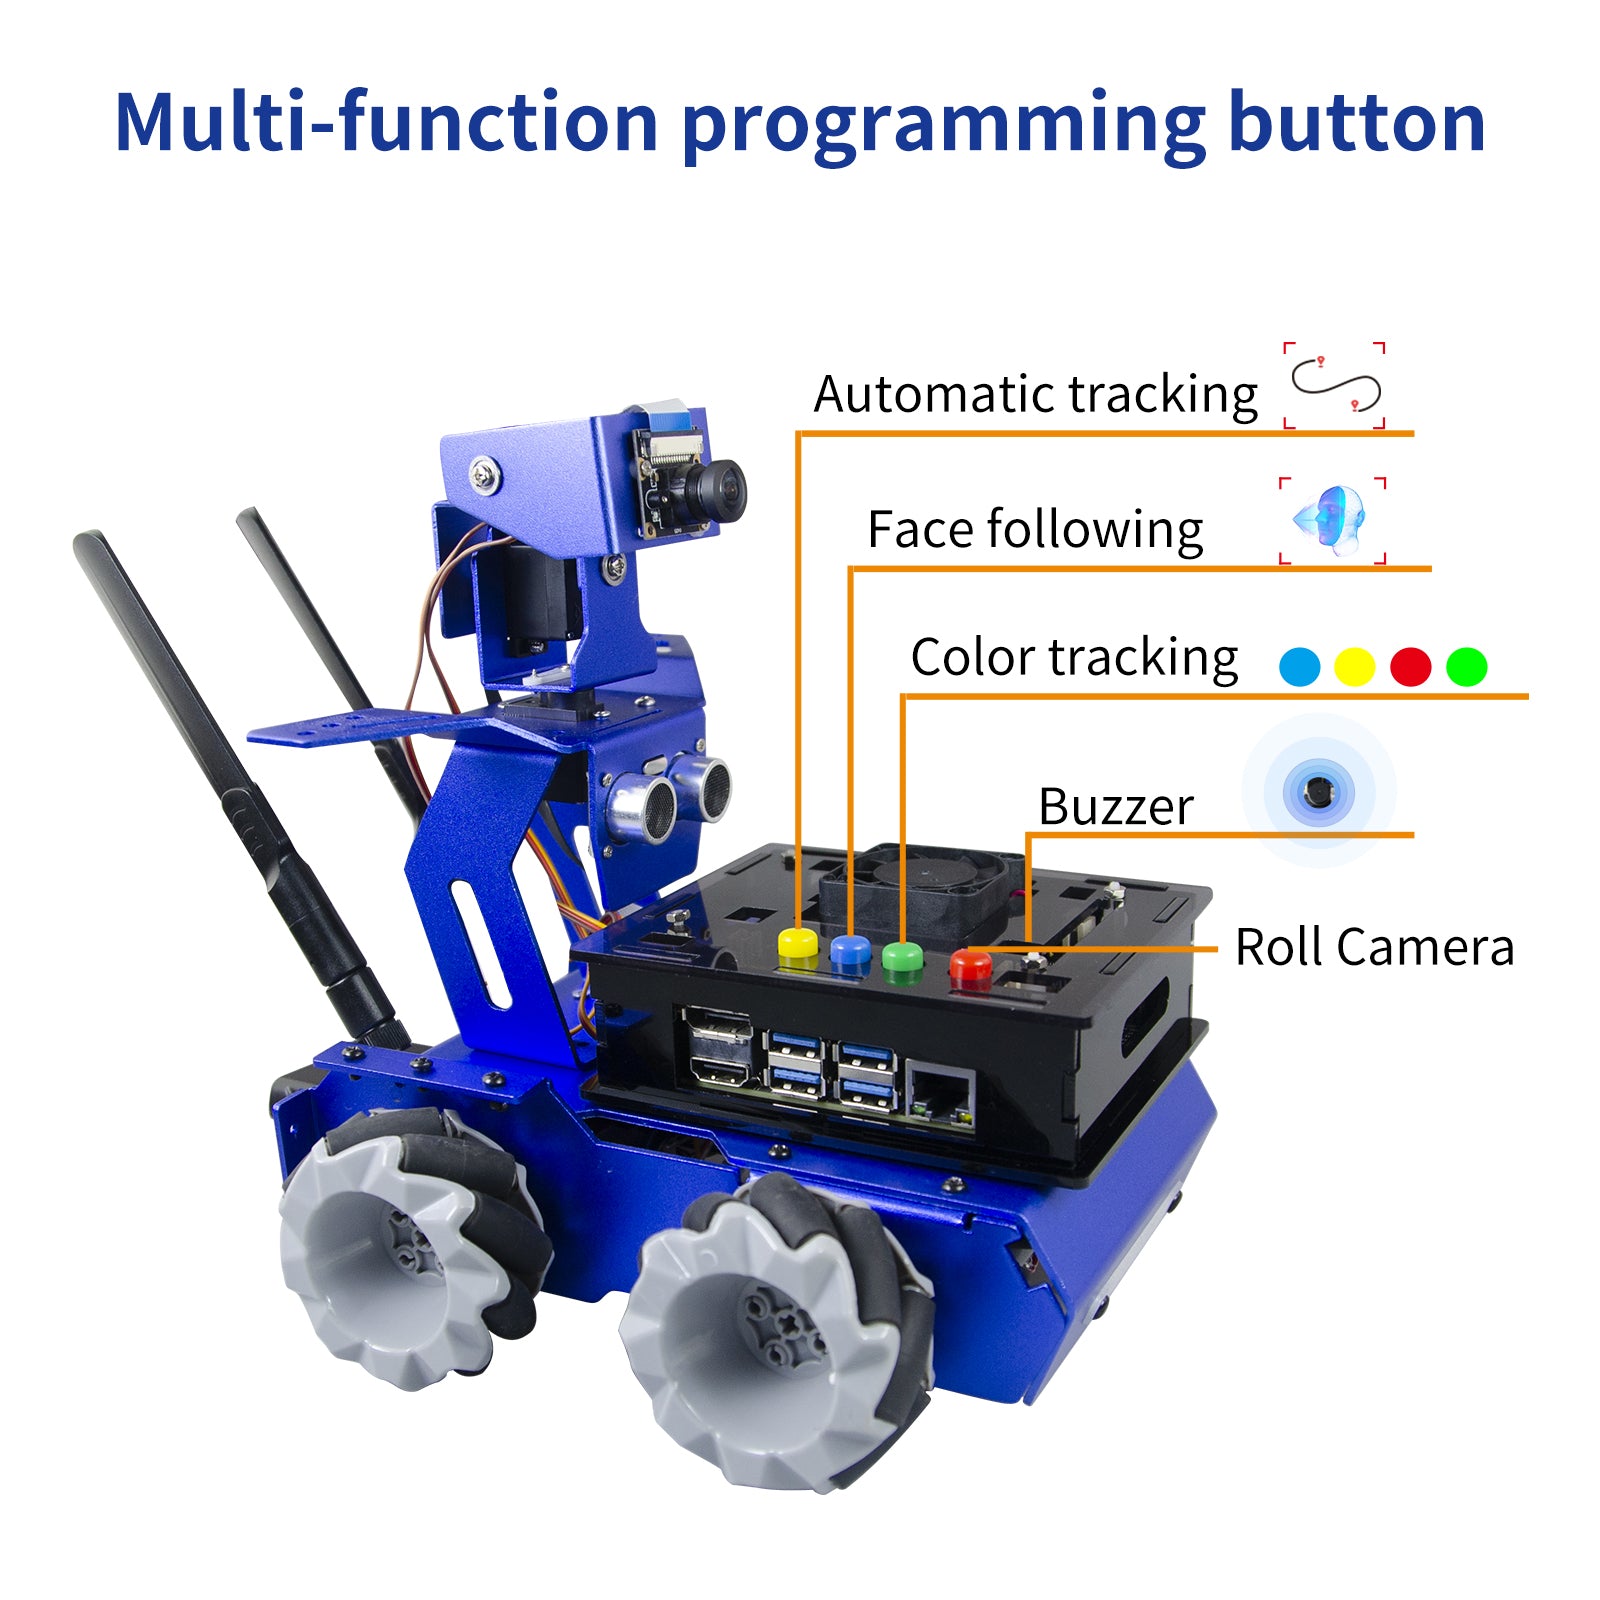 Multi-function programming button introduction of XiaorR Geek Jetson Nano Jetbot 2.0 wireless Mecanum wheeled smart robot car